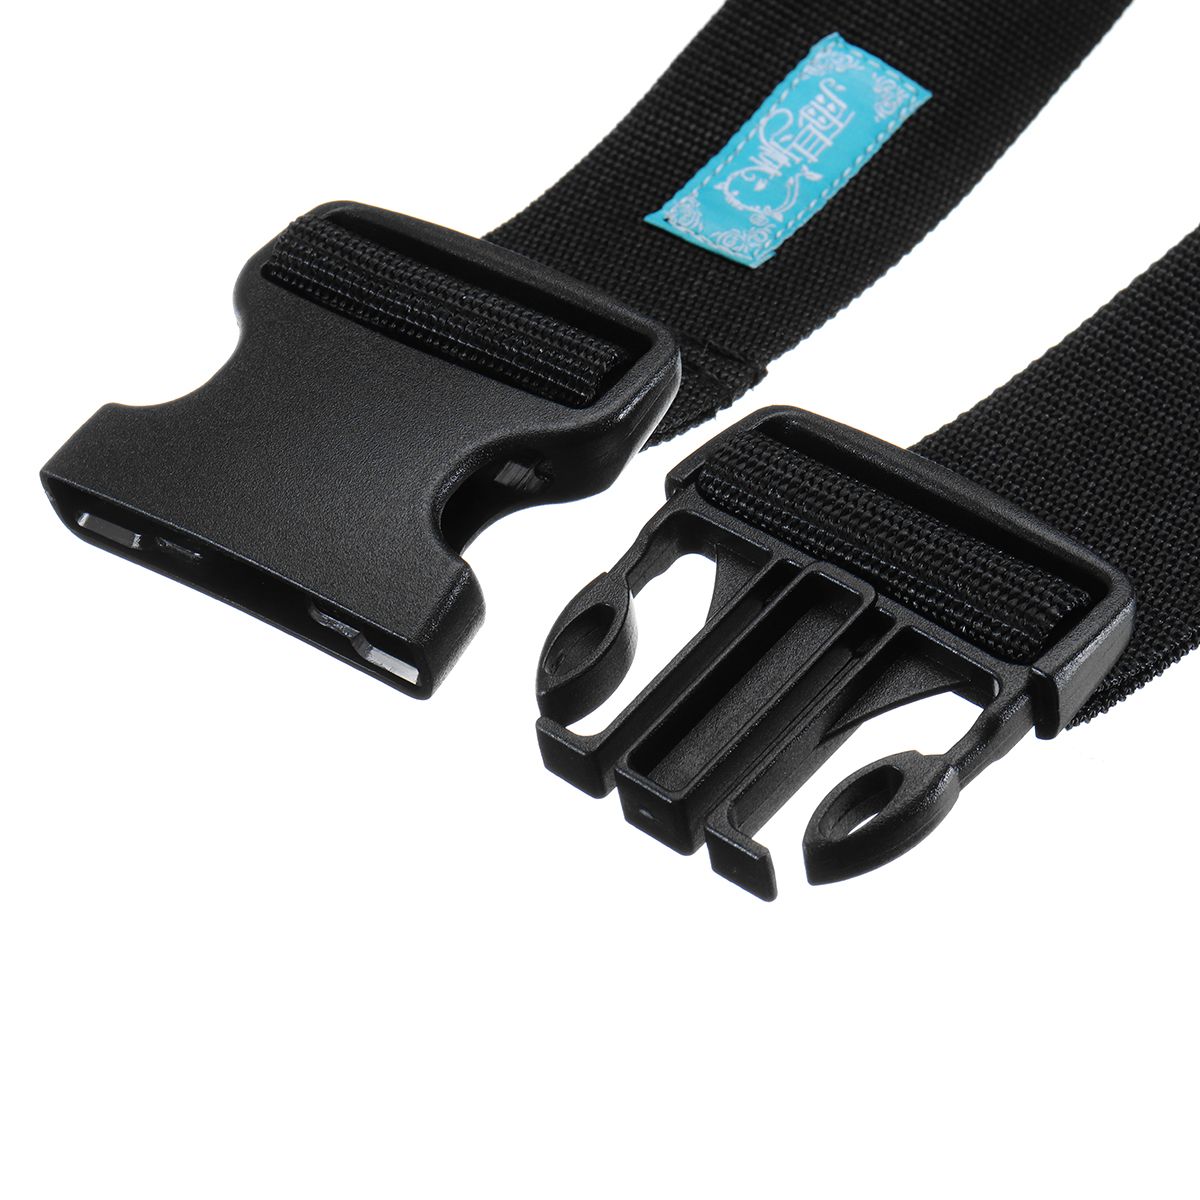 2-Size-Wheelchair-Lap-Belt-Strap--Safety-Seat-Belt-Adjustable-Length-1427210